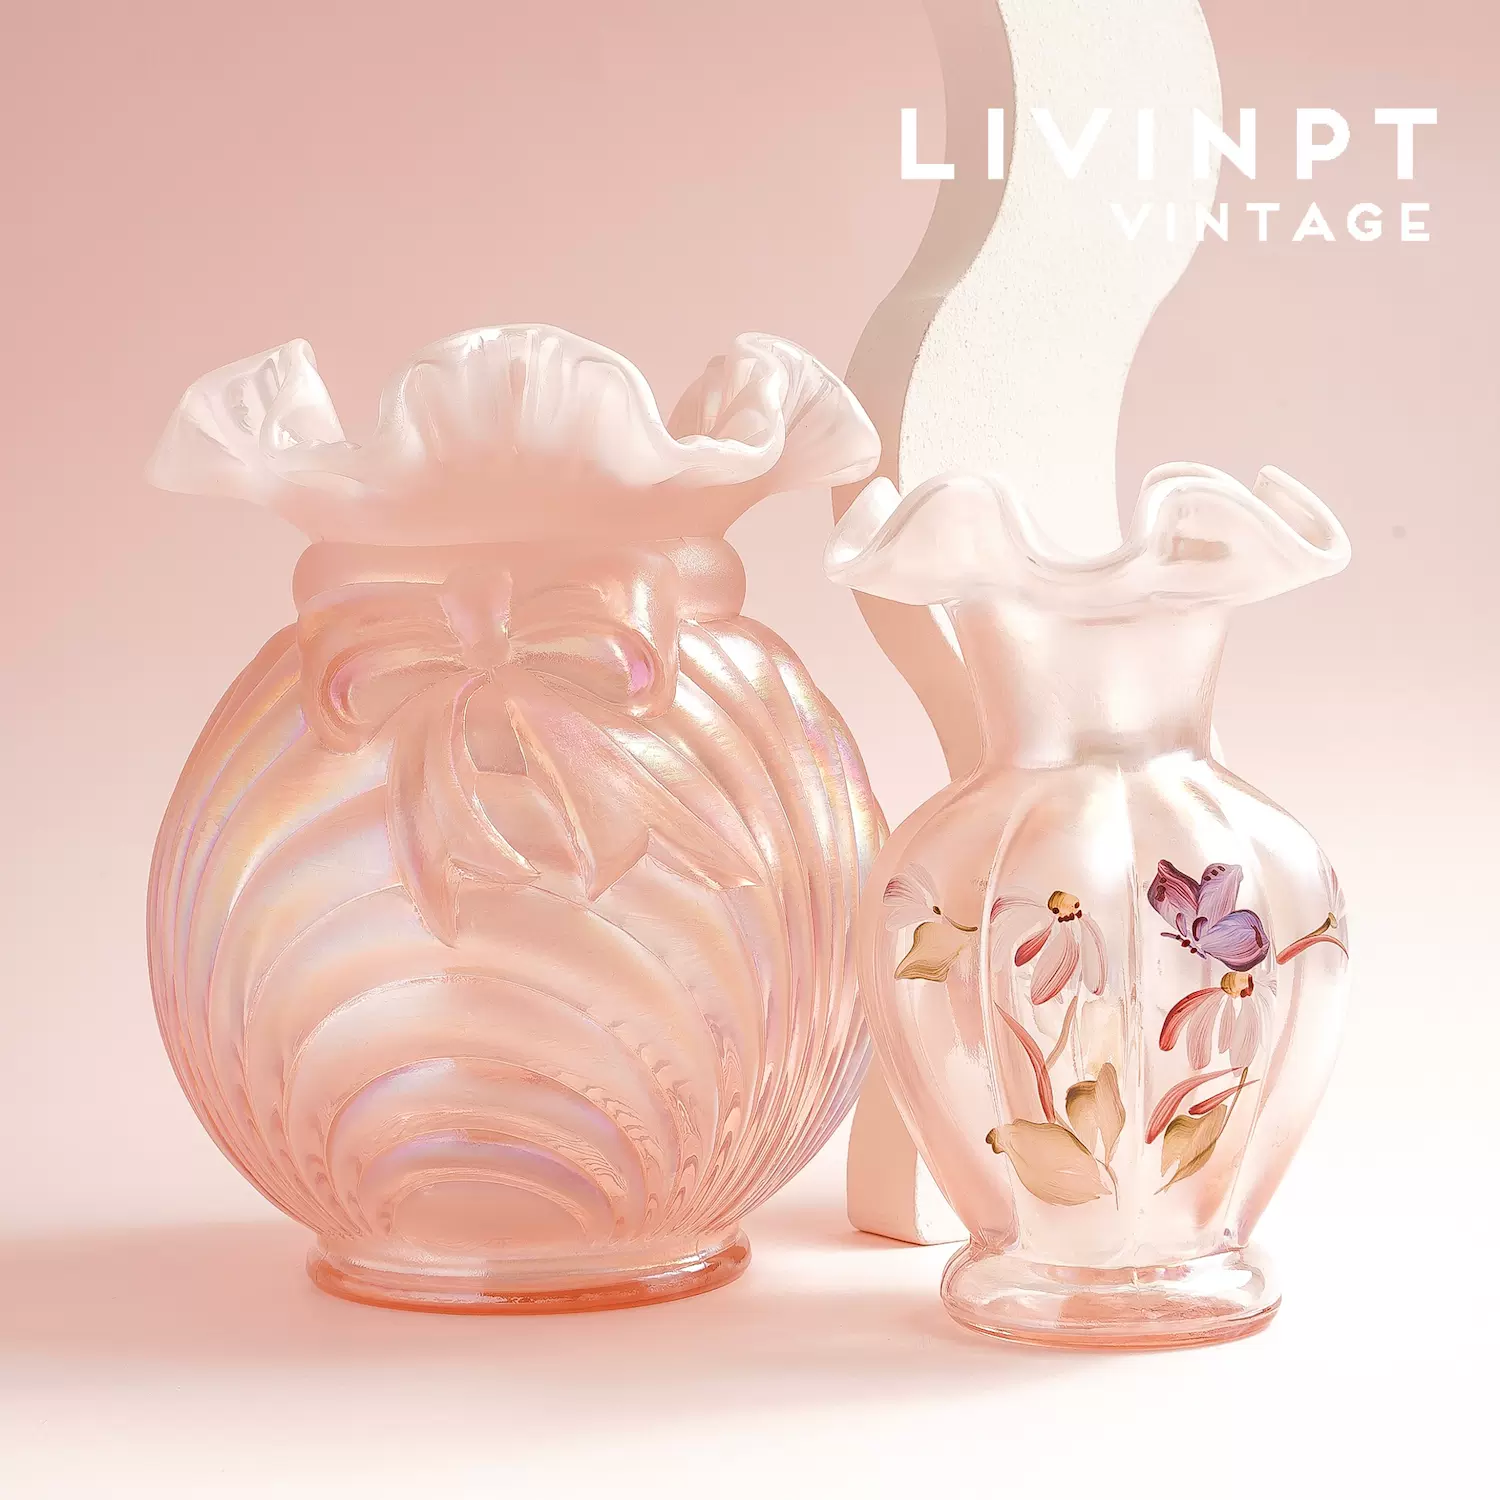 LIVINPT VINTAGE美国Fenton芬顿哑光虹彩蝴蝶结手绘玻璃中古花瓶-Taobao 